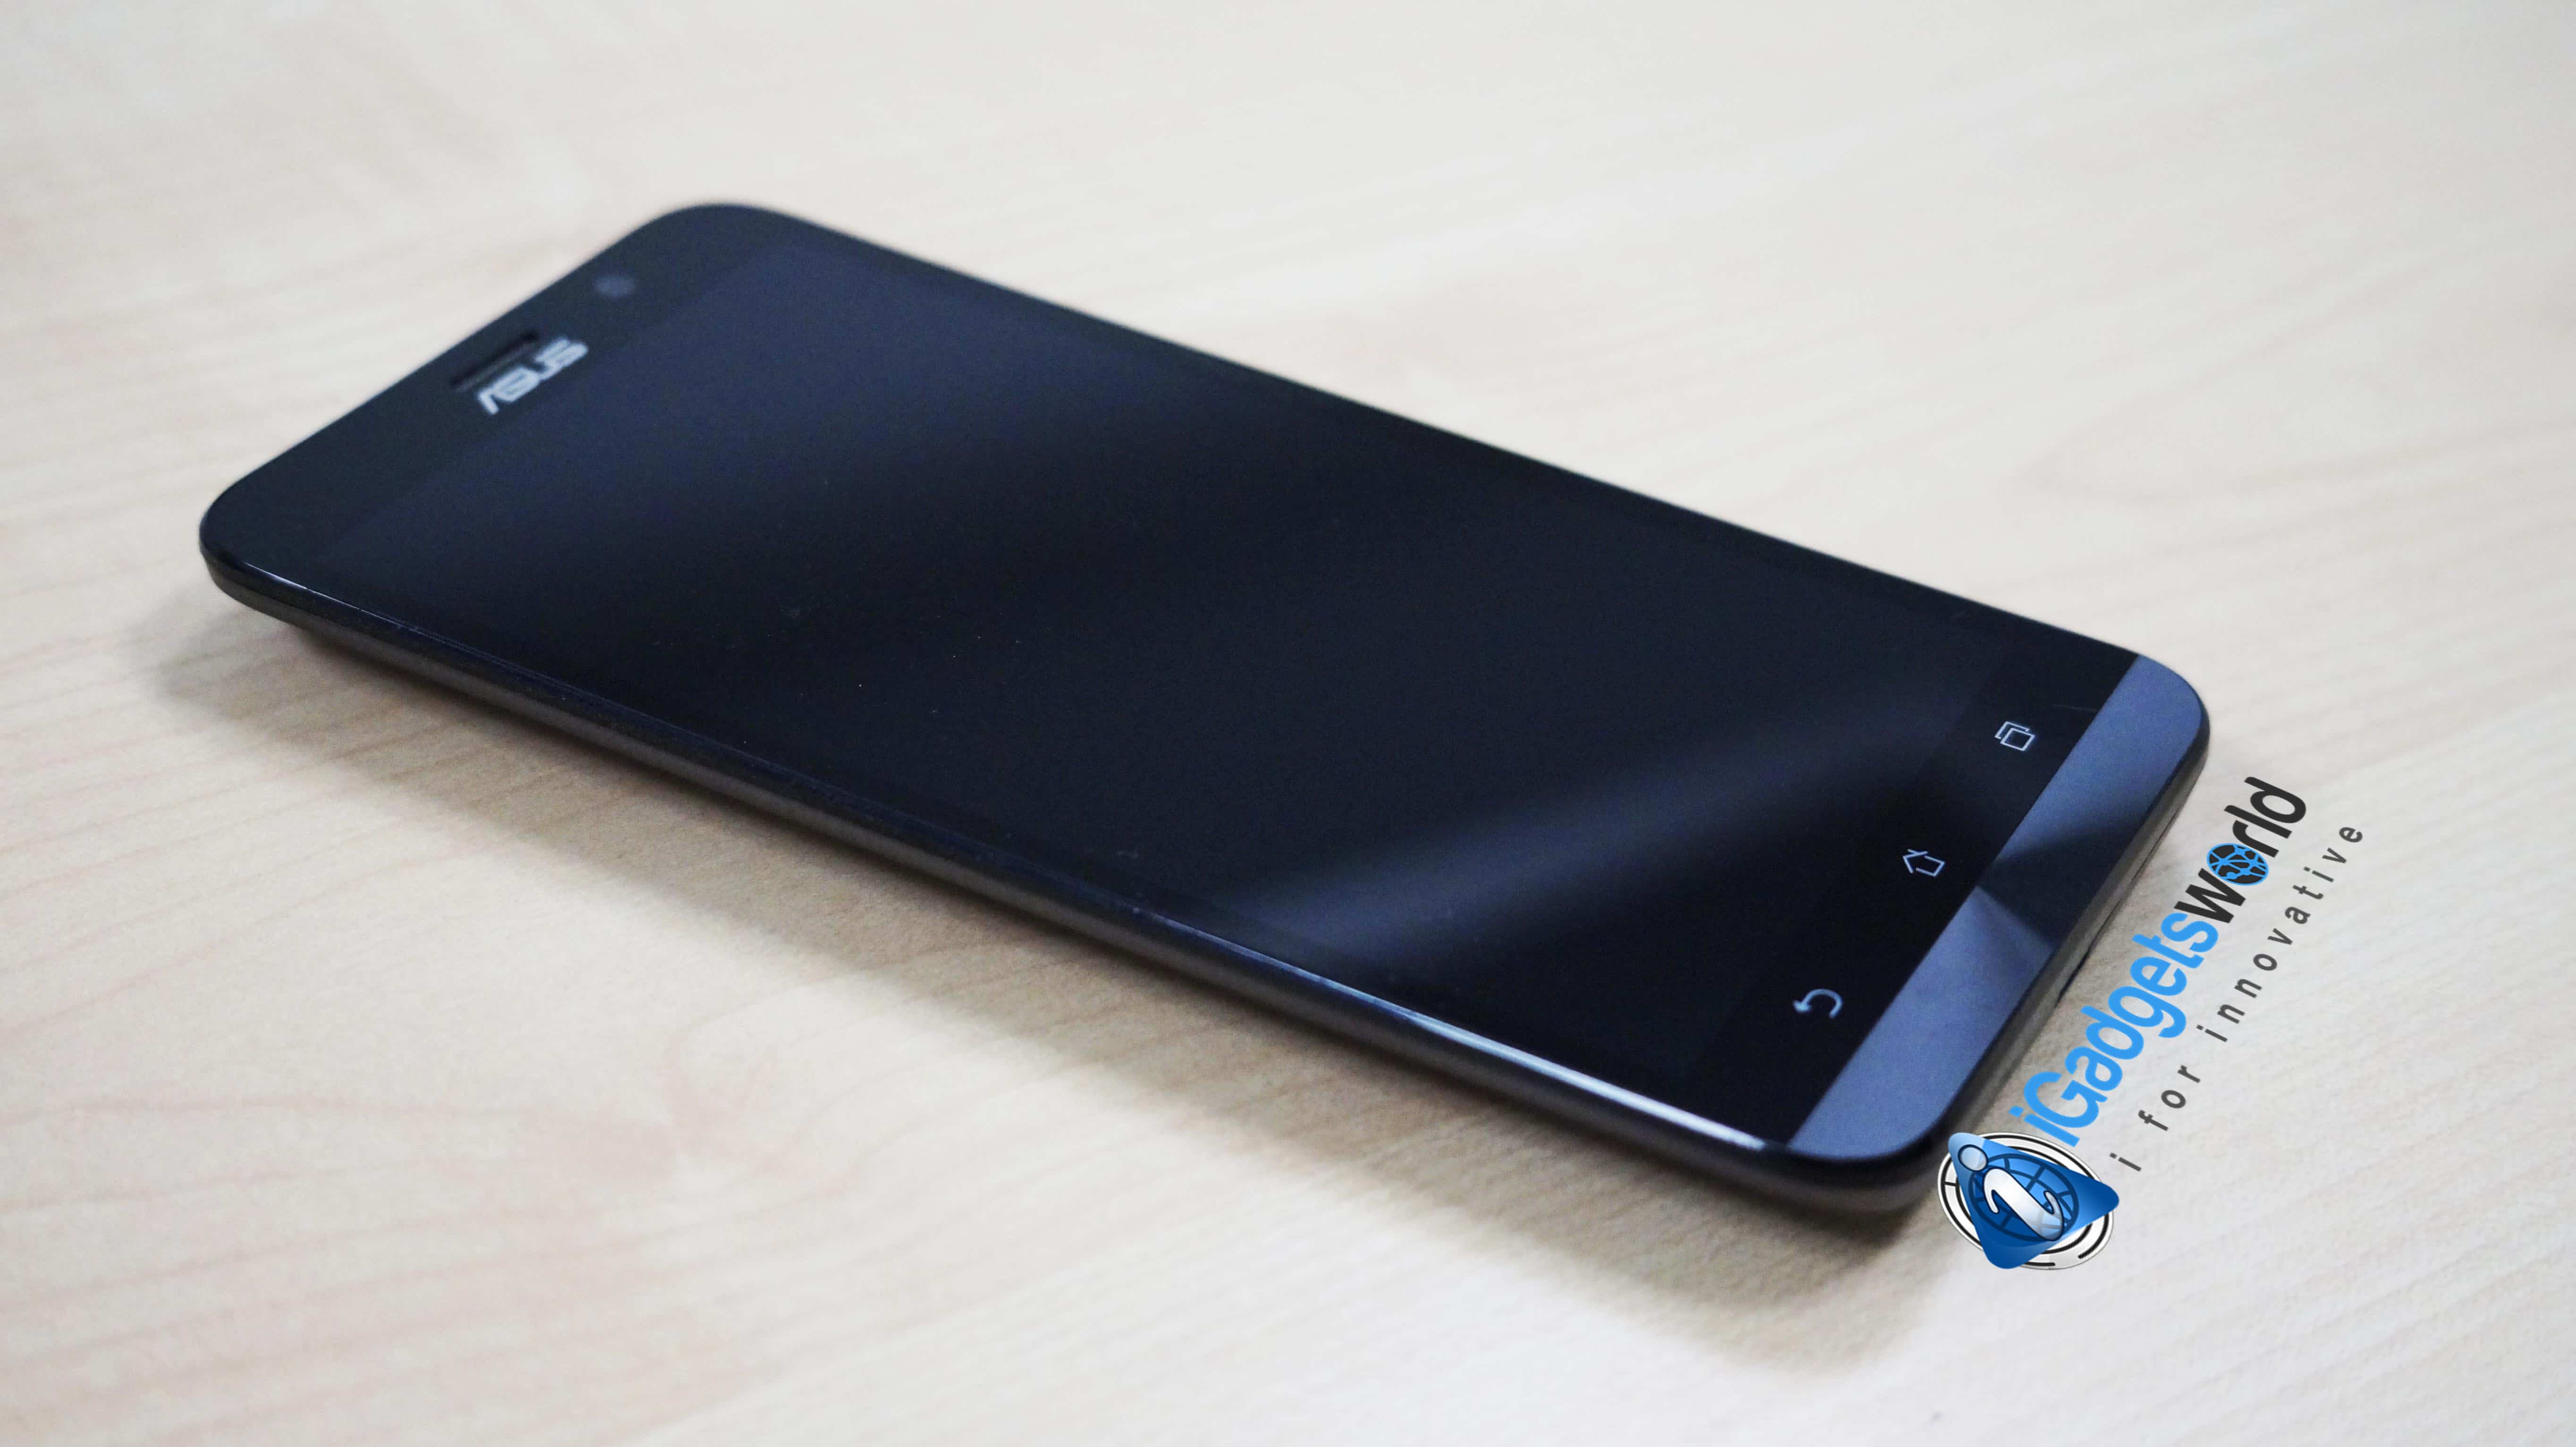 Asus Zenfone 2 ZE551ML Review: Is This The Best Smartphone 